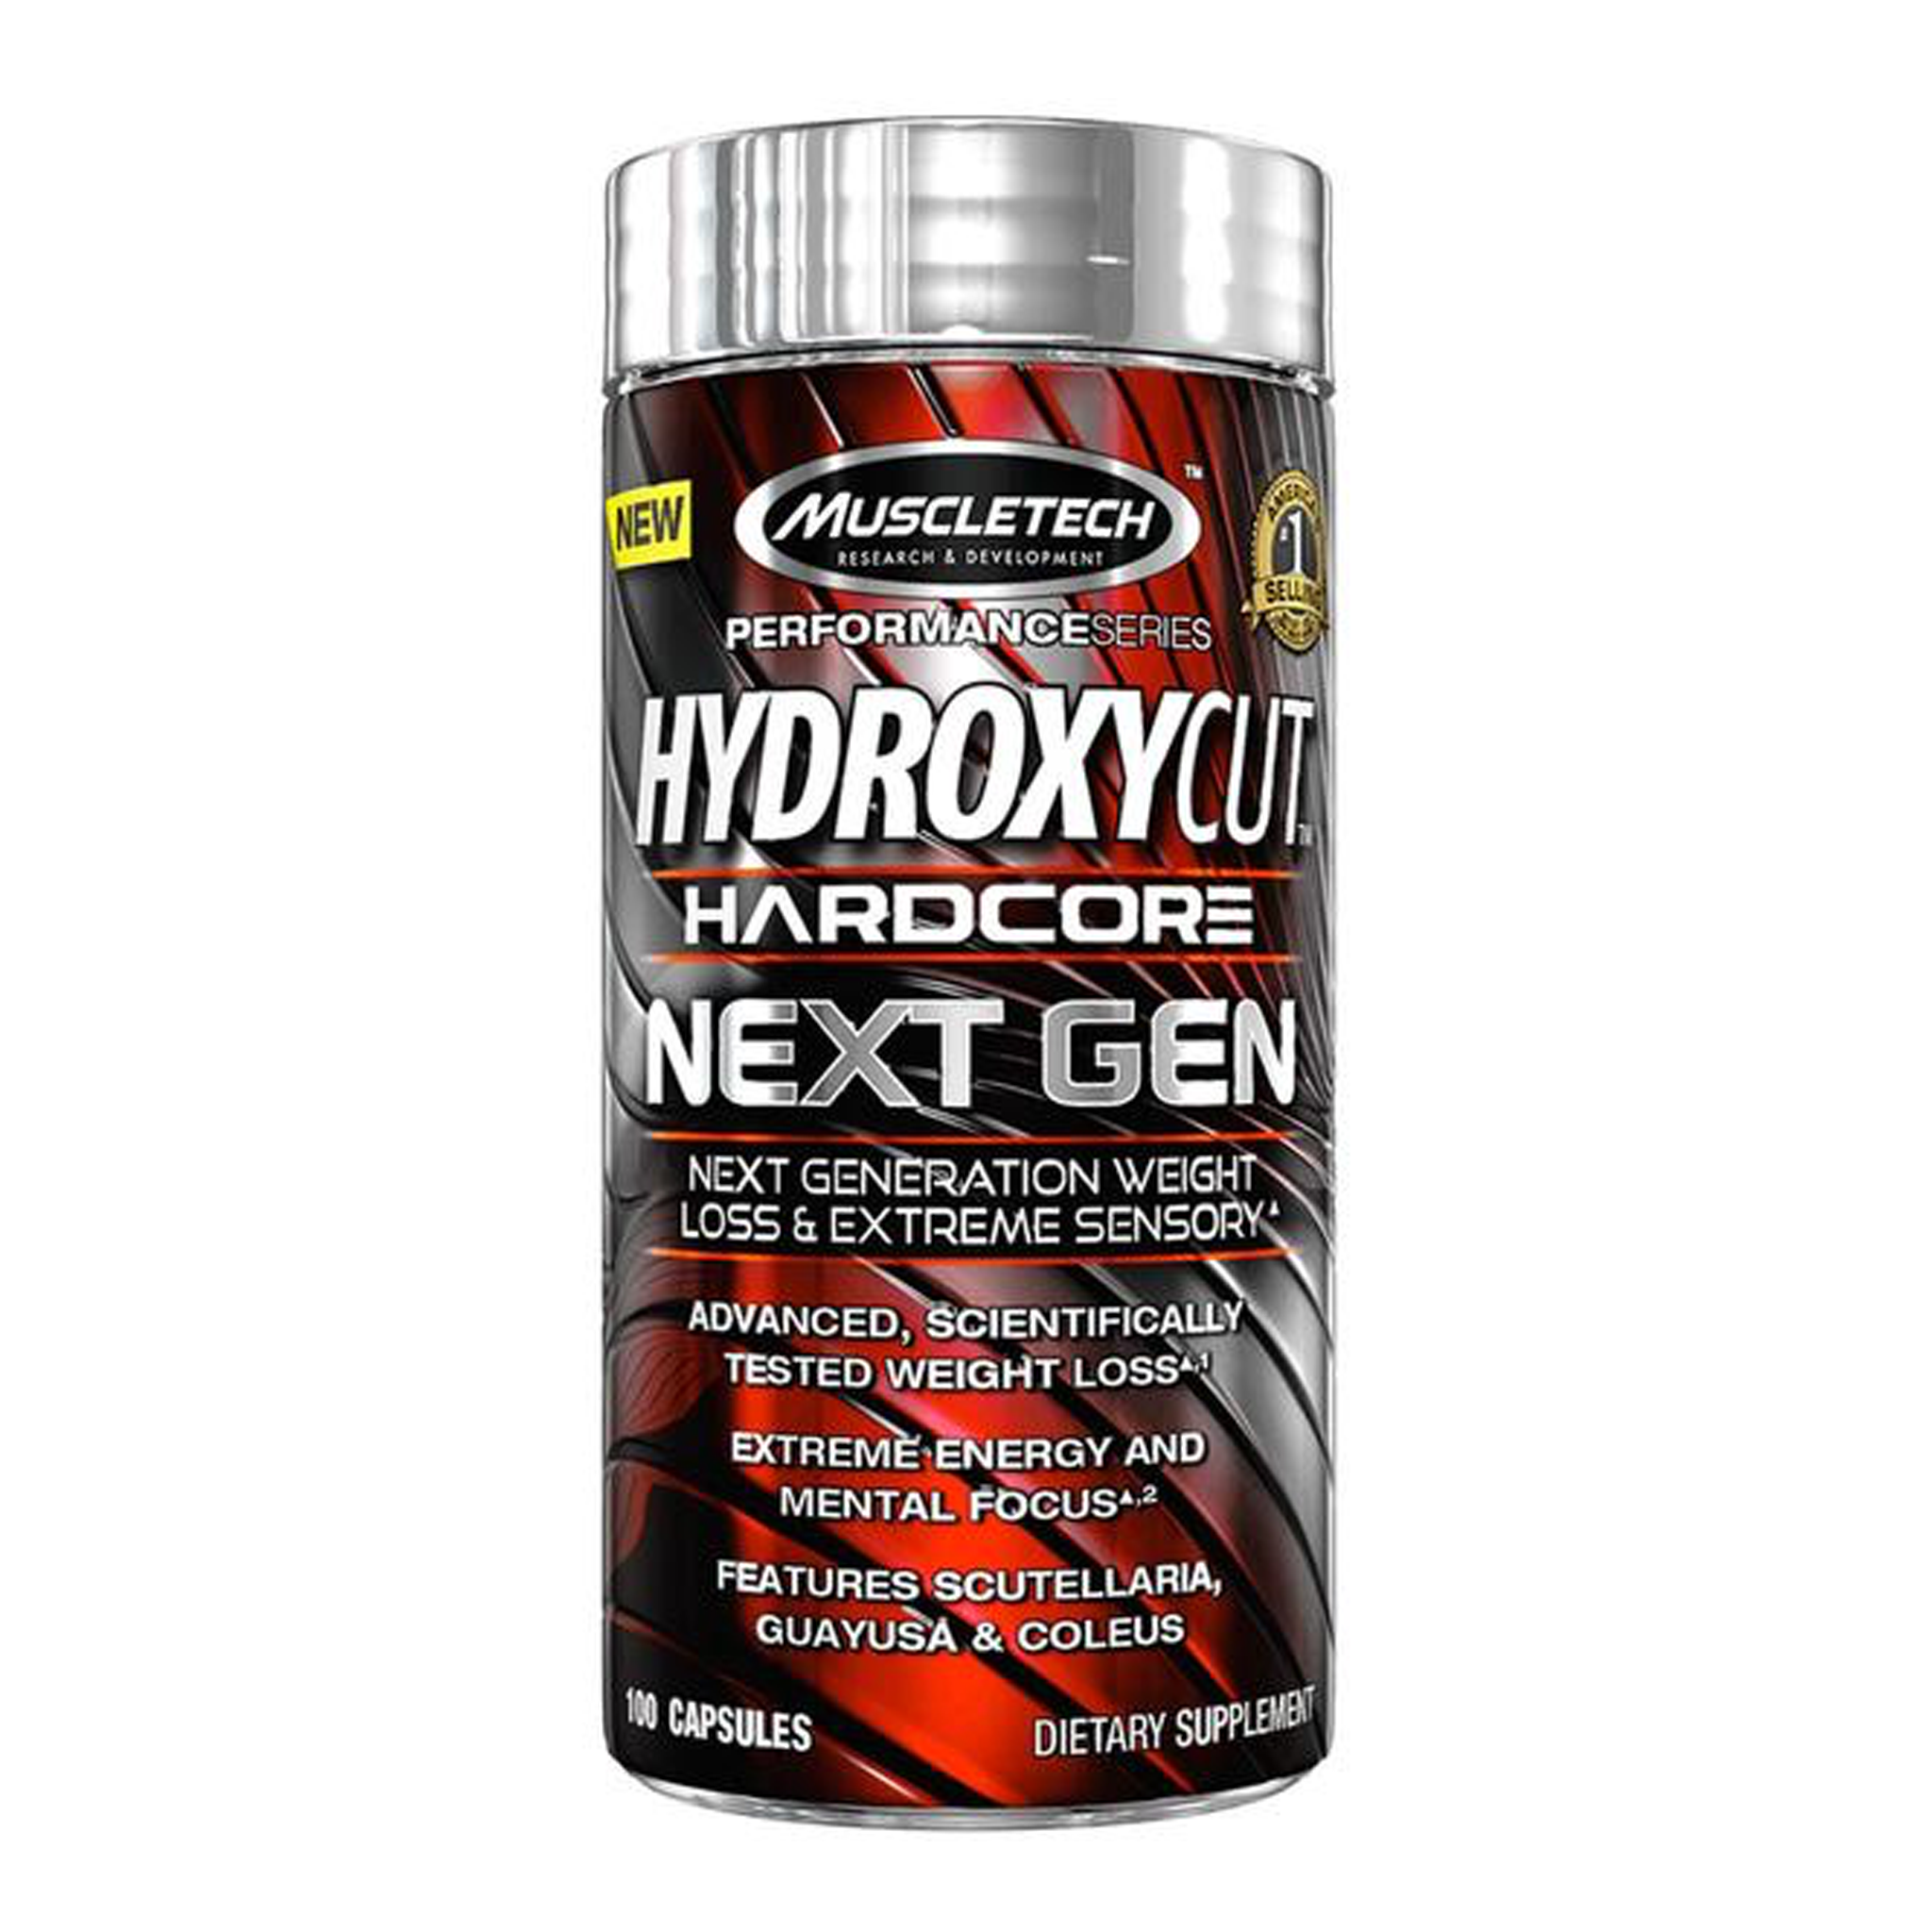 Hydroxycut Hardcore NEXT GEN (100 Caps)